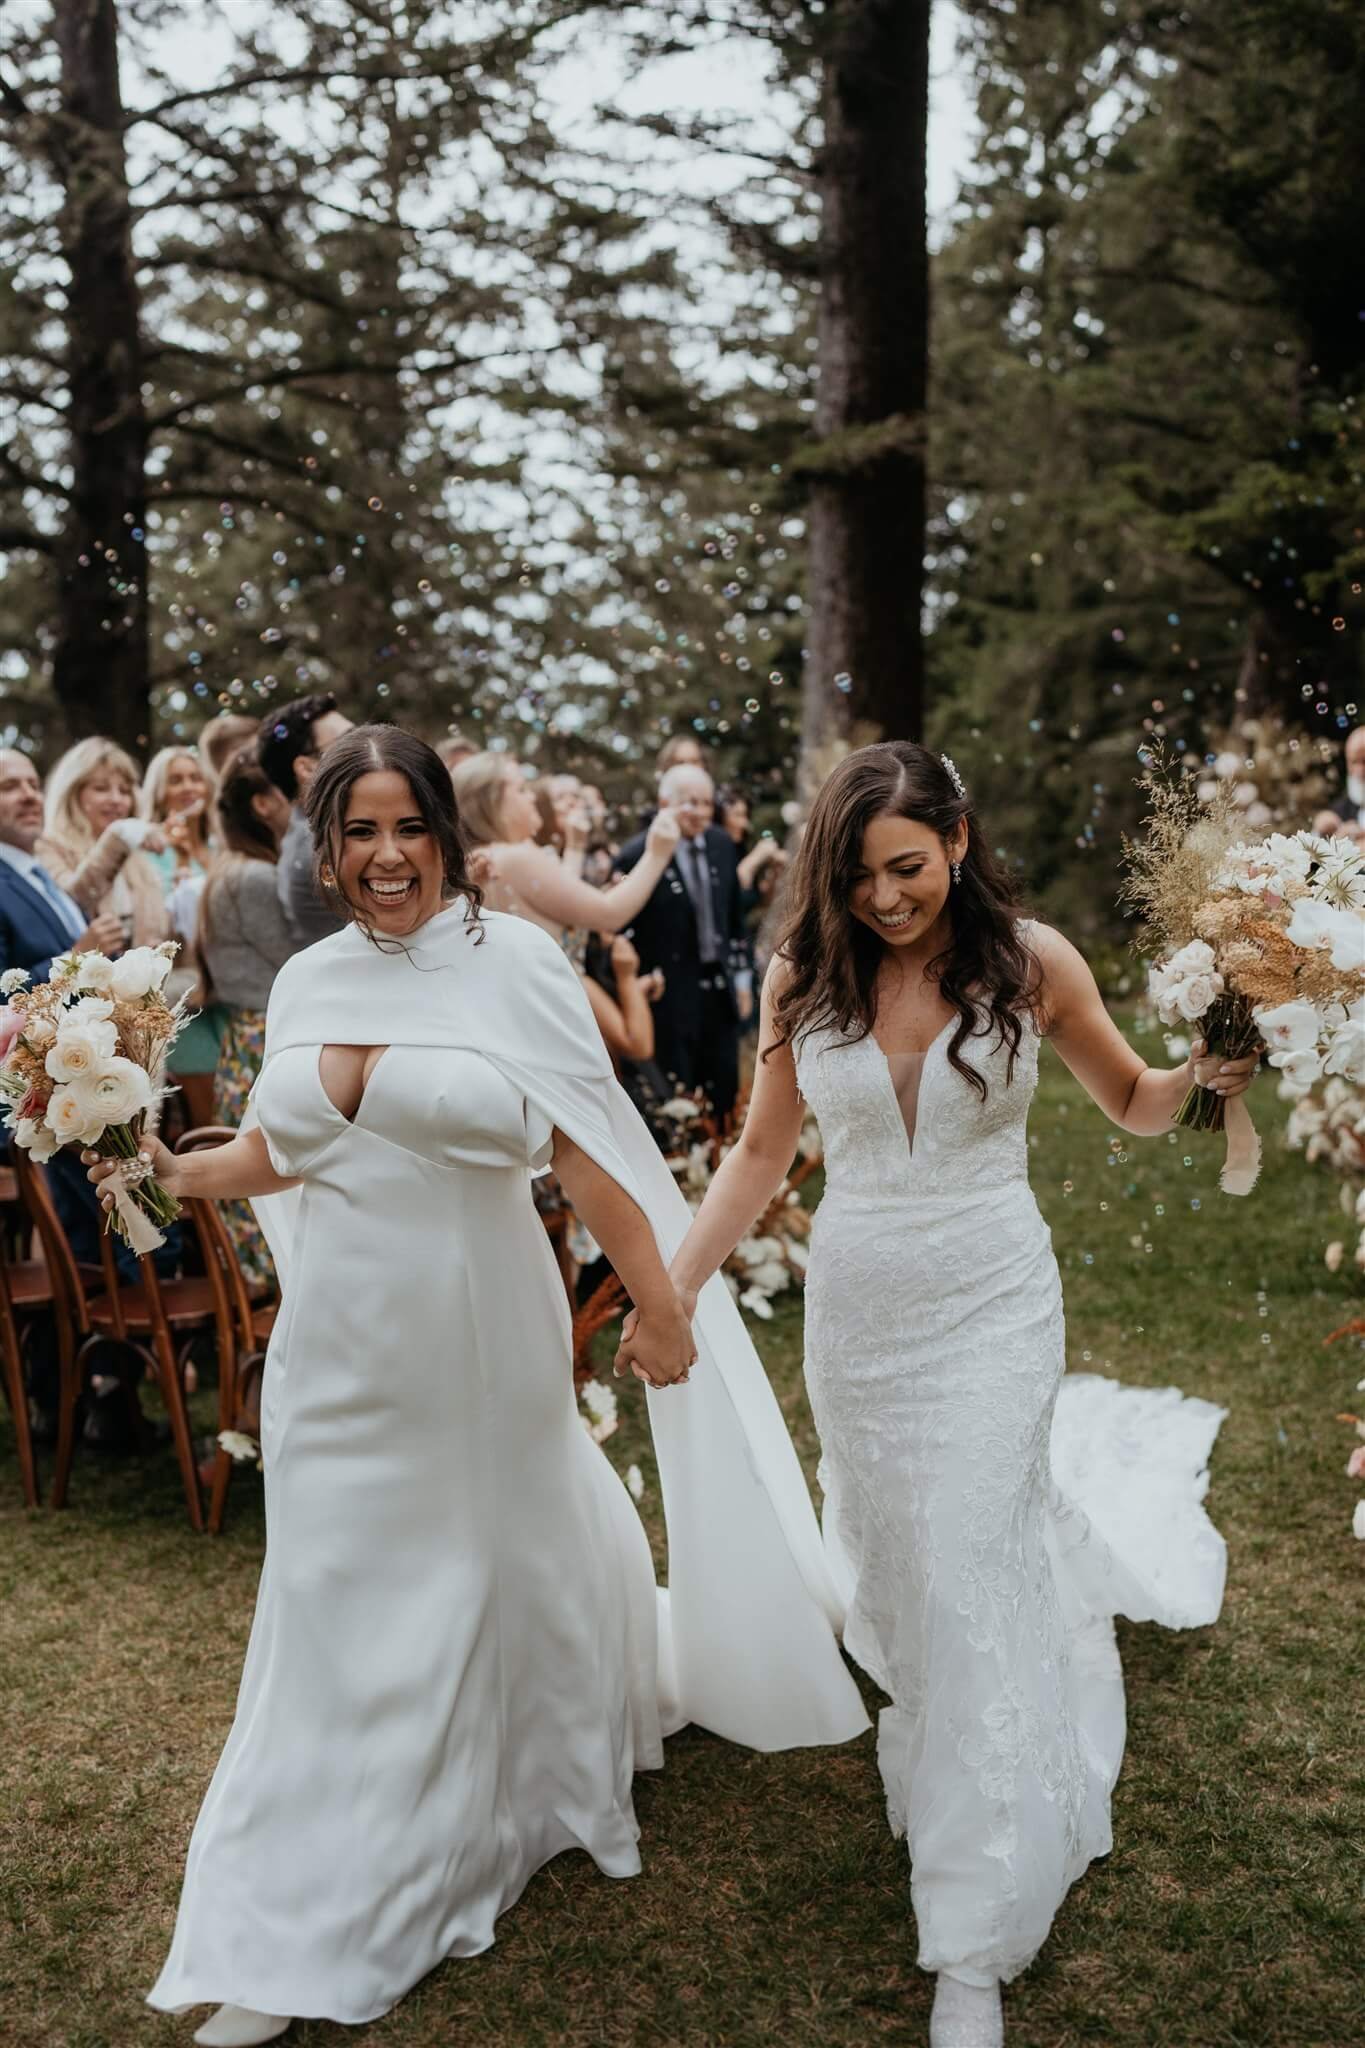 Two brides exit elegant wedding ceremony